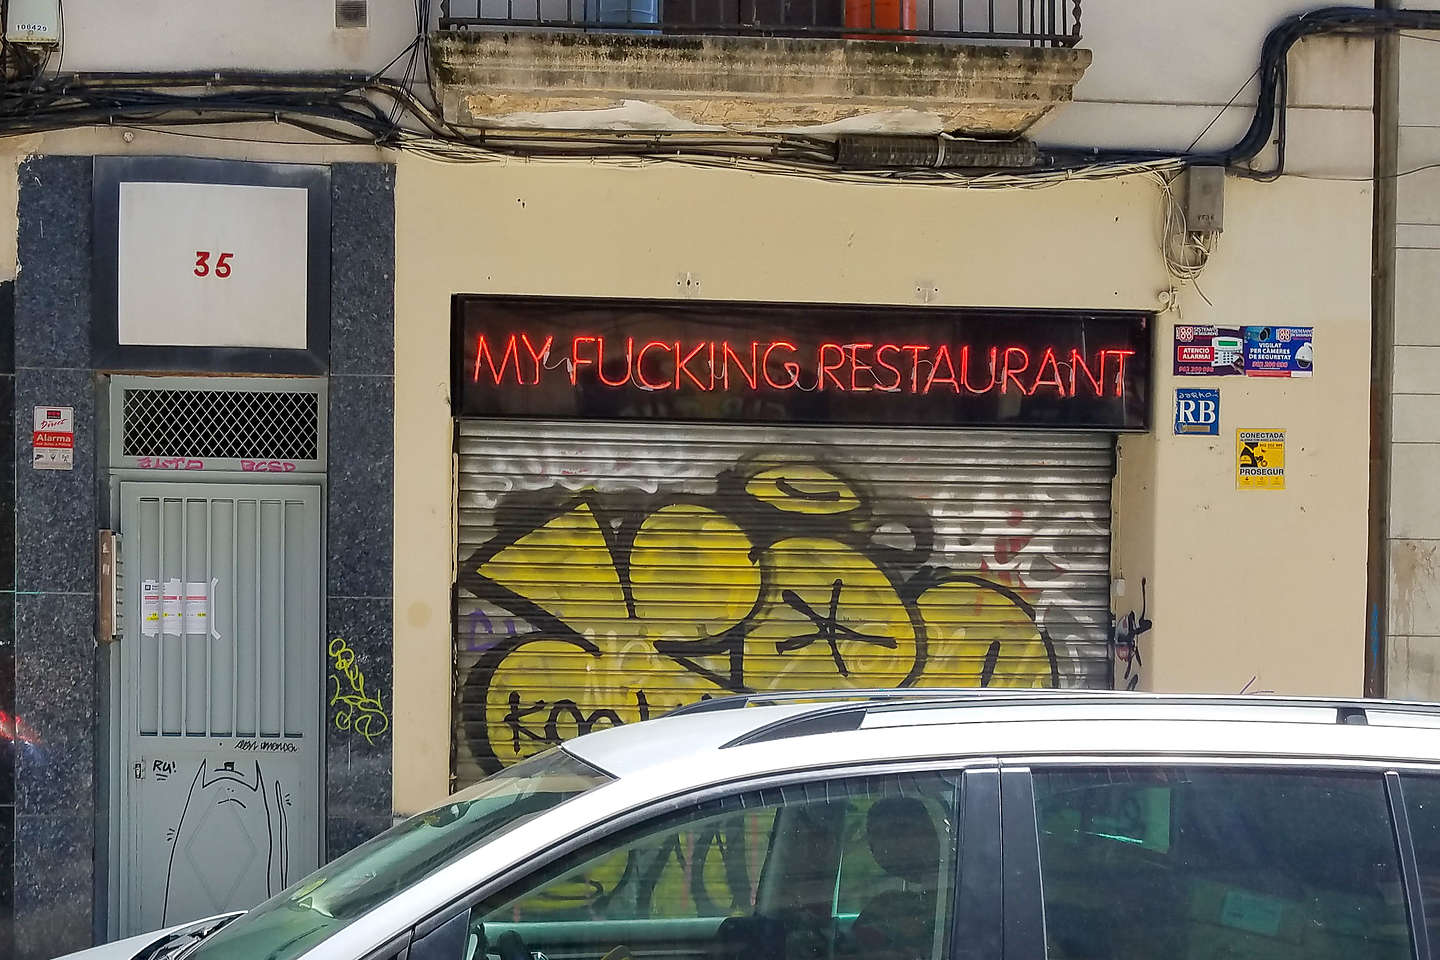 I wonder whose restaurant it is?